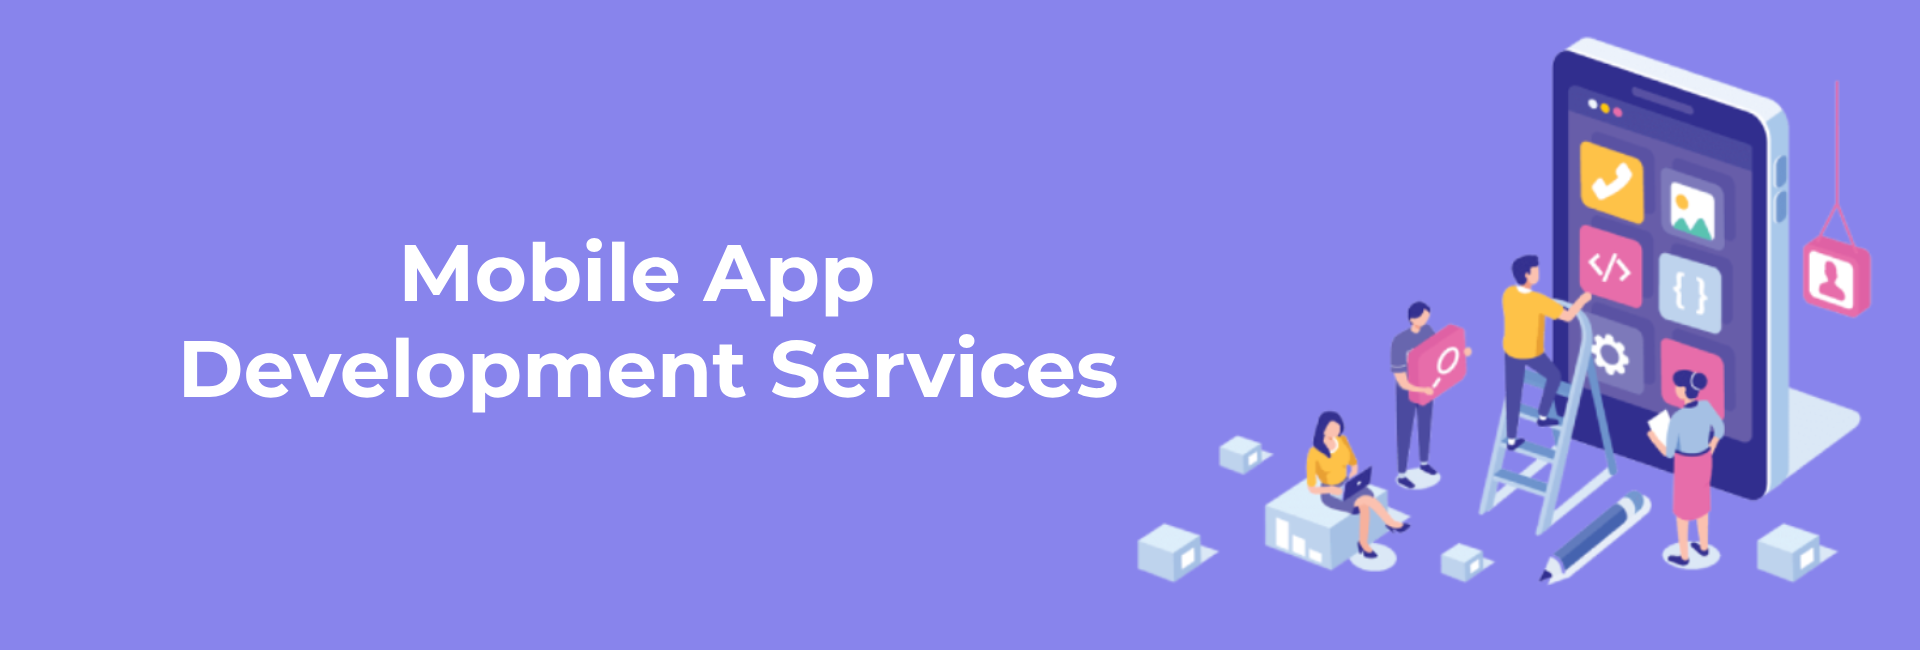 Image of Mobile App Development Services